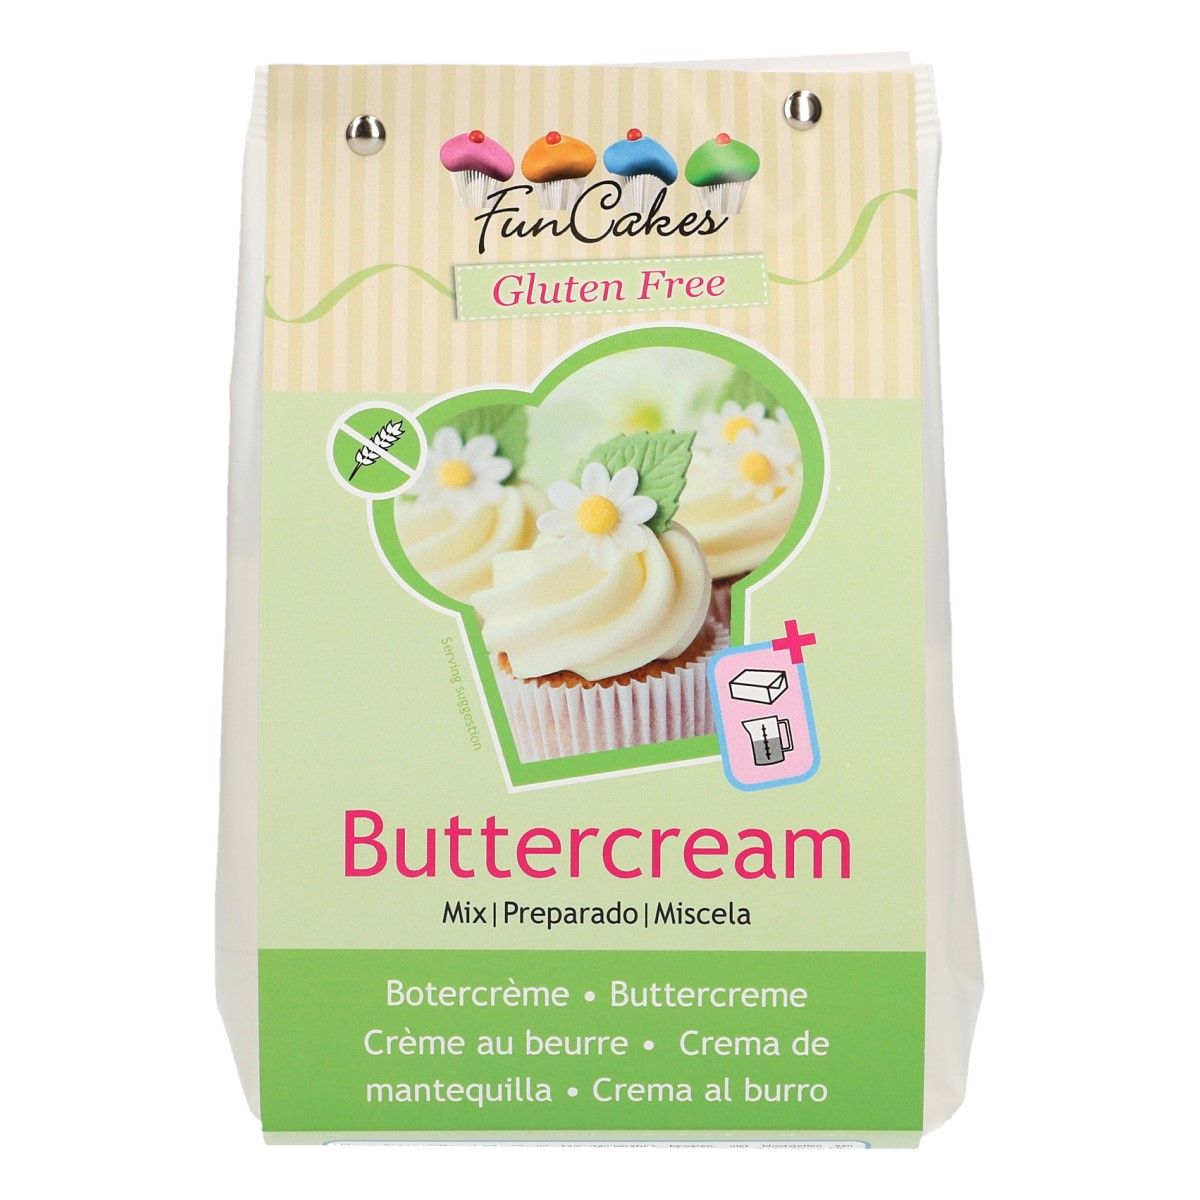 Funcakes Mix For Buttercream, Gluten Free 500g - cakesupply.ch